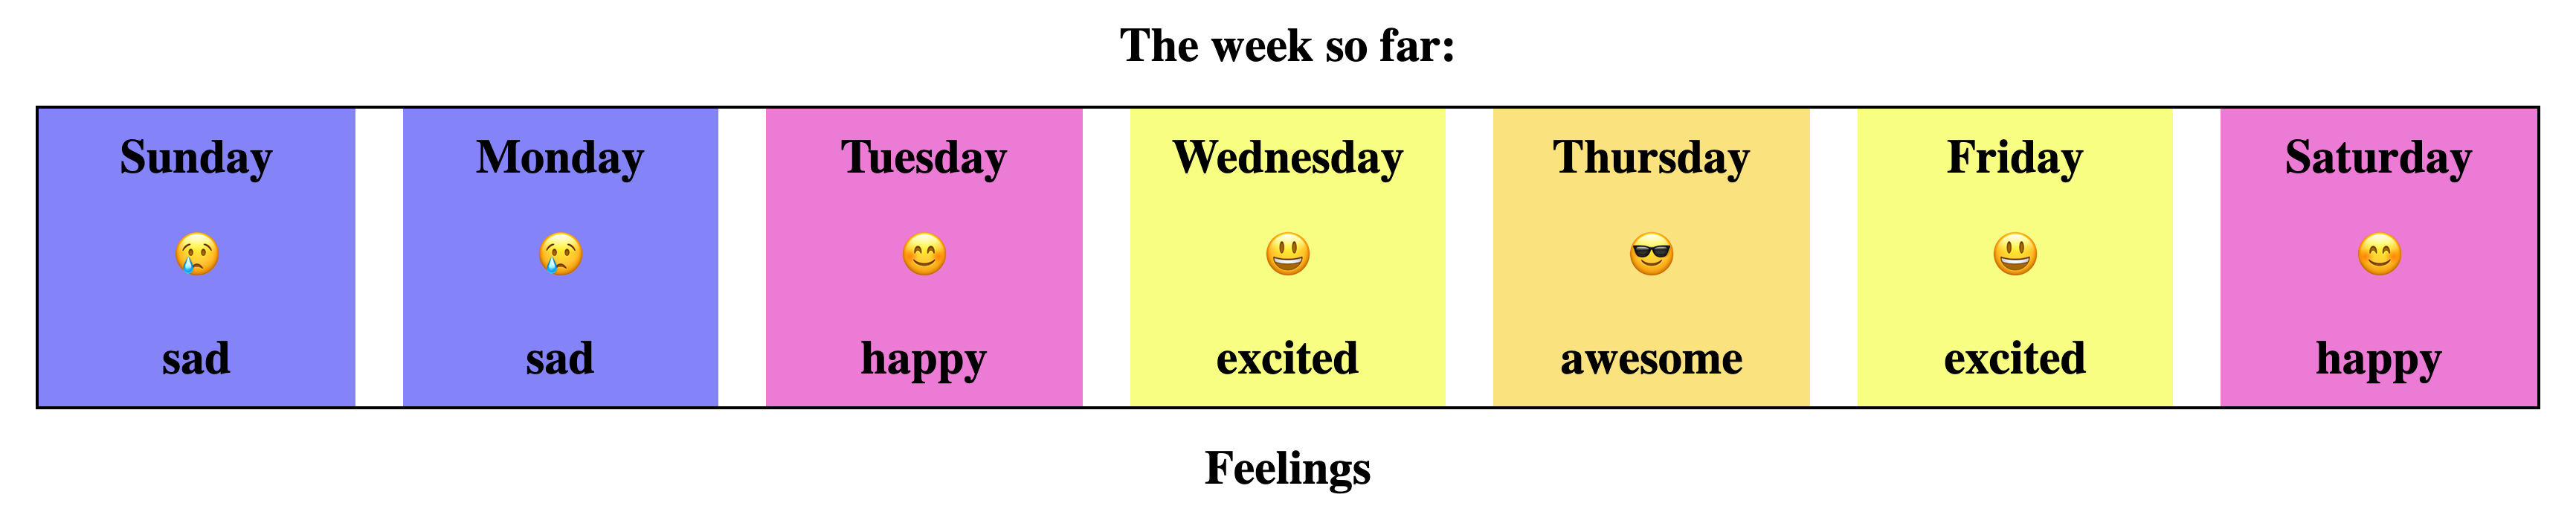 dashboard of feelings each day of the week